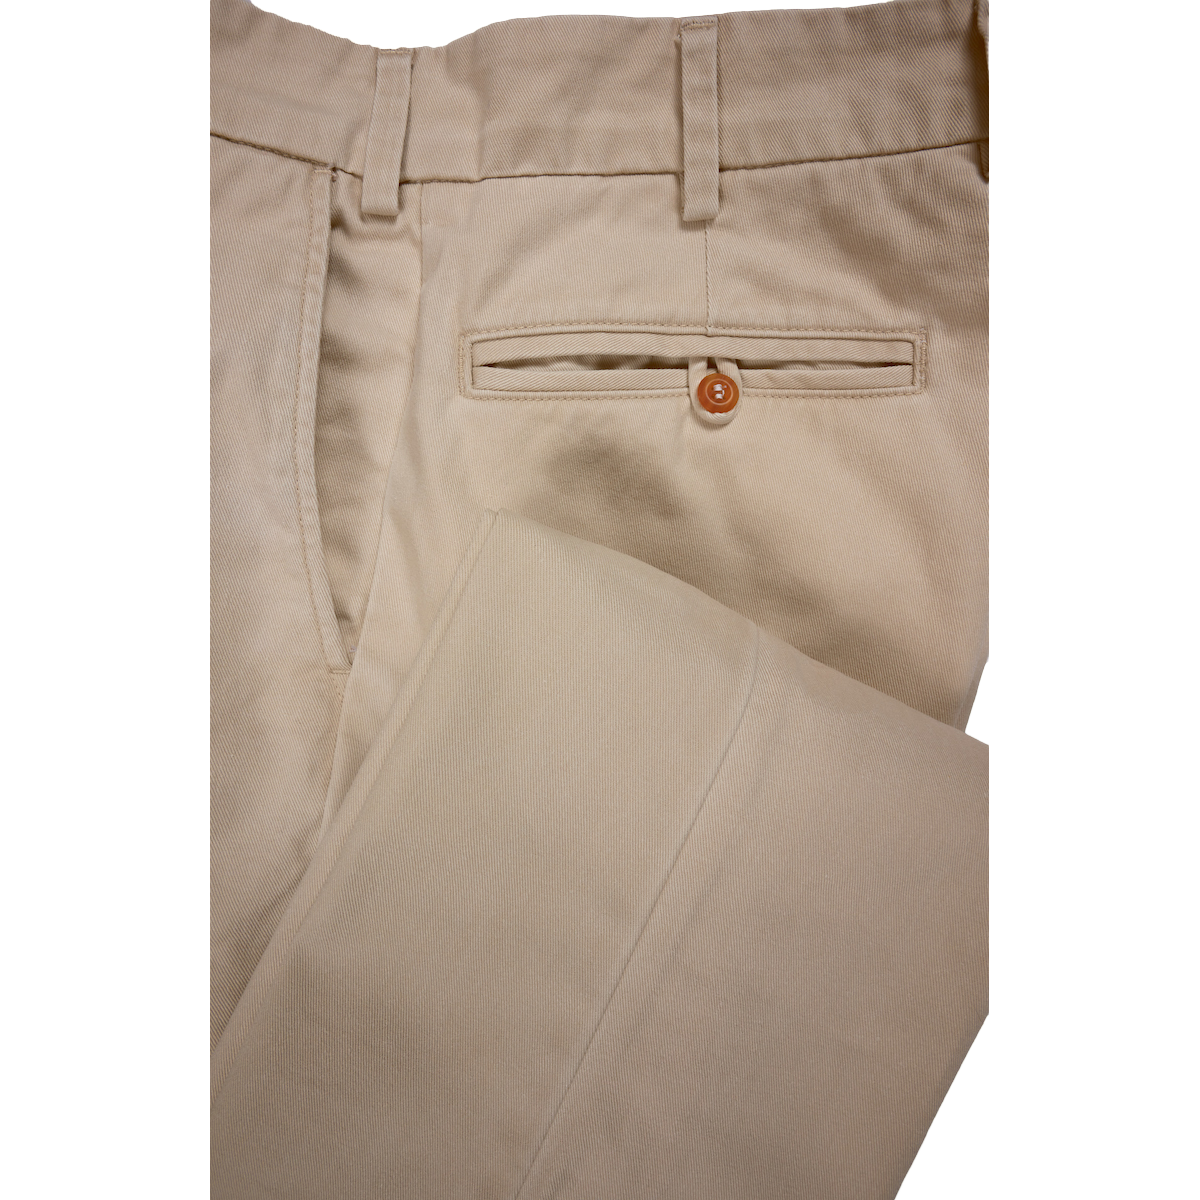 The American Khaki Pant in Dark Khaki by PennBilt - Hansen's Clothing